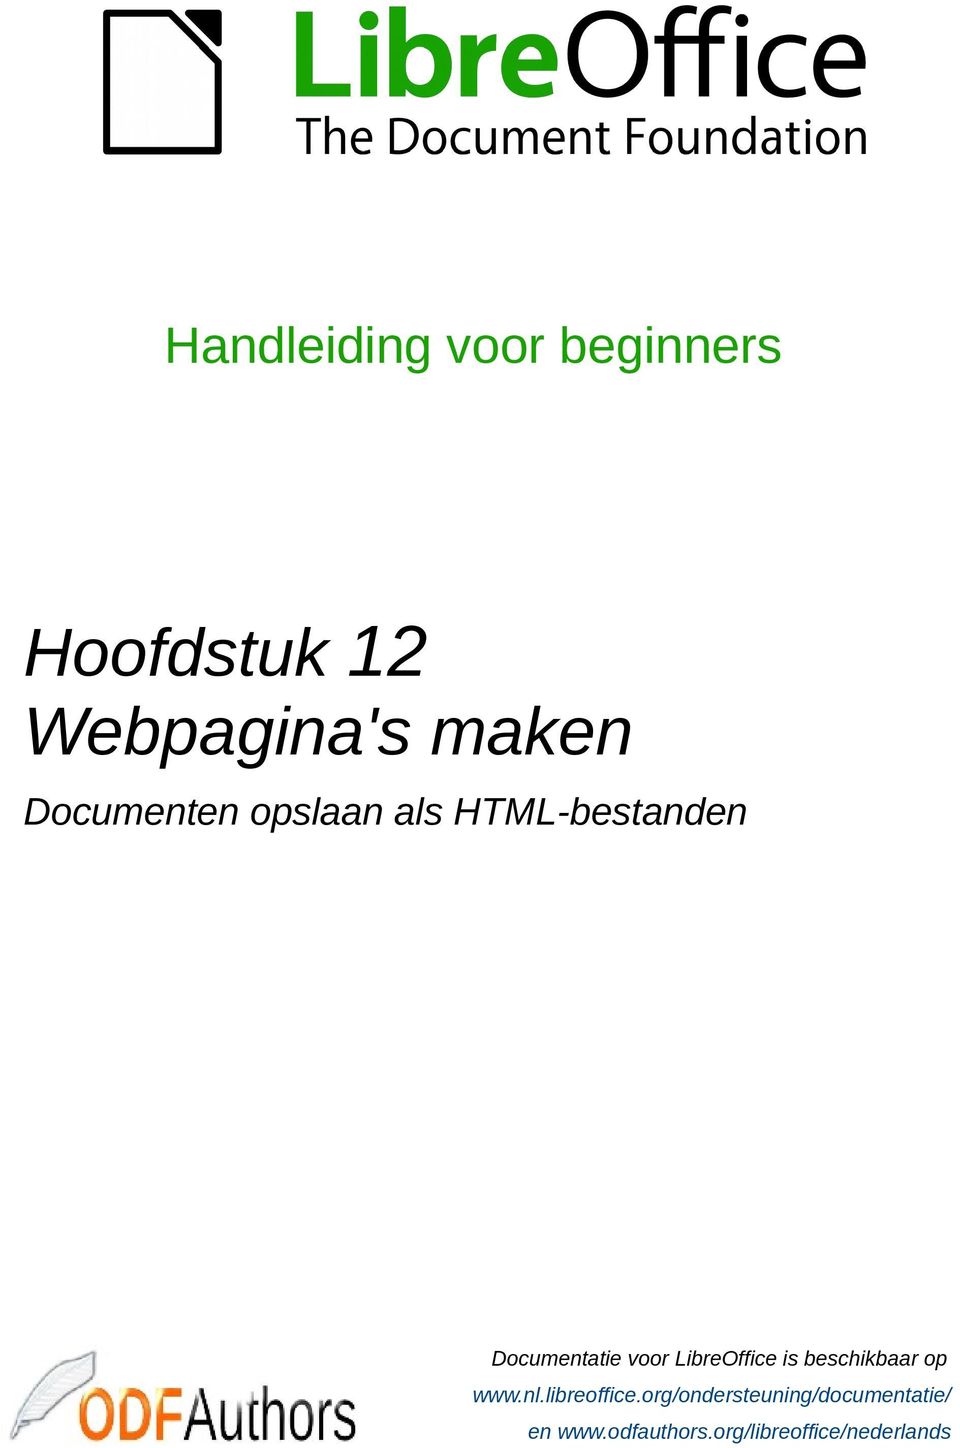 LibreOffice is beschikbaar op www.nl.libreoffice.